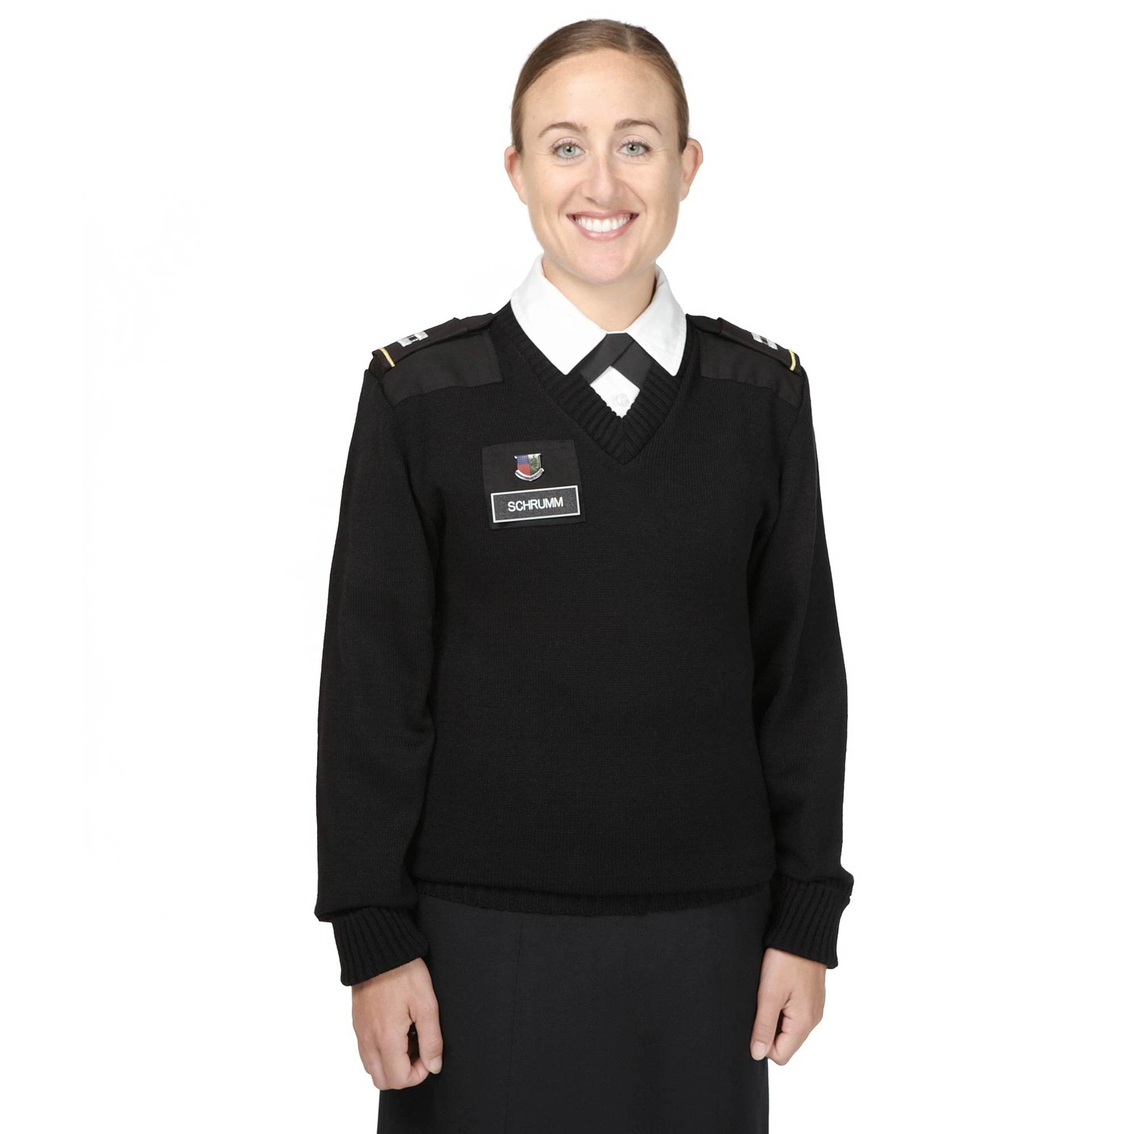 Army Class A Uniform Accessories 30